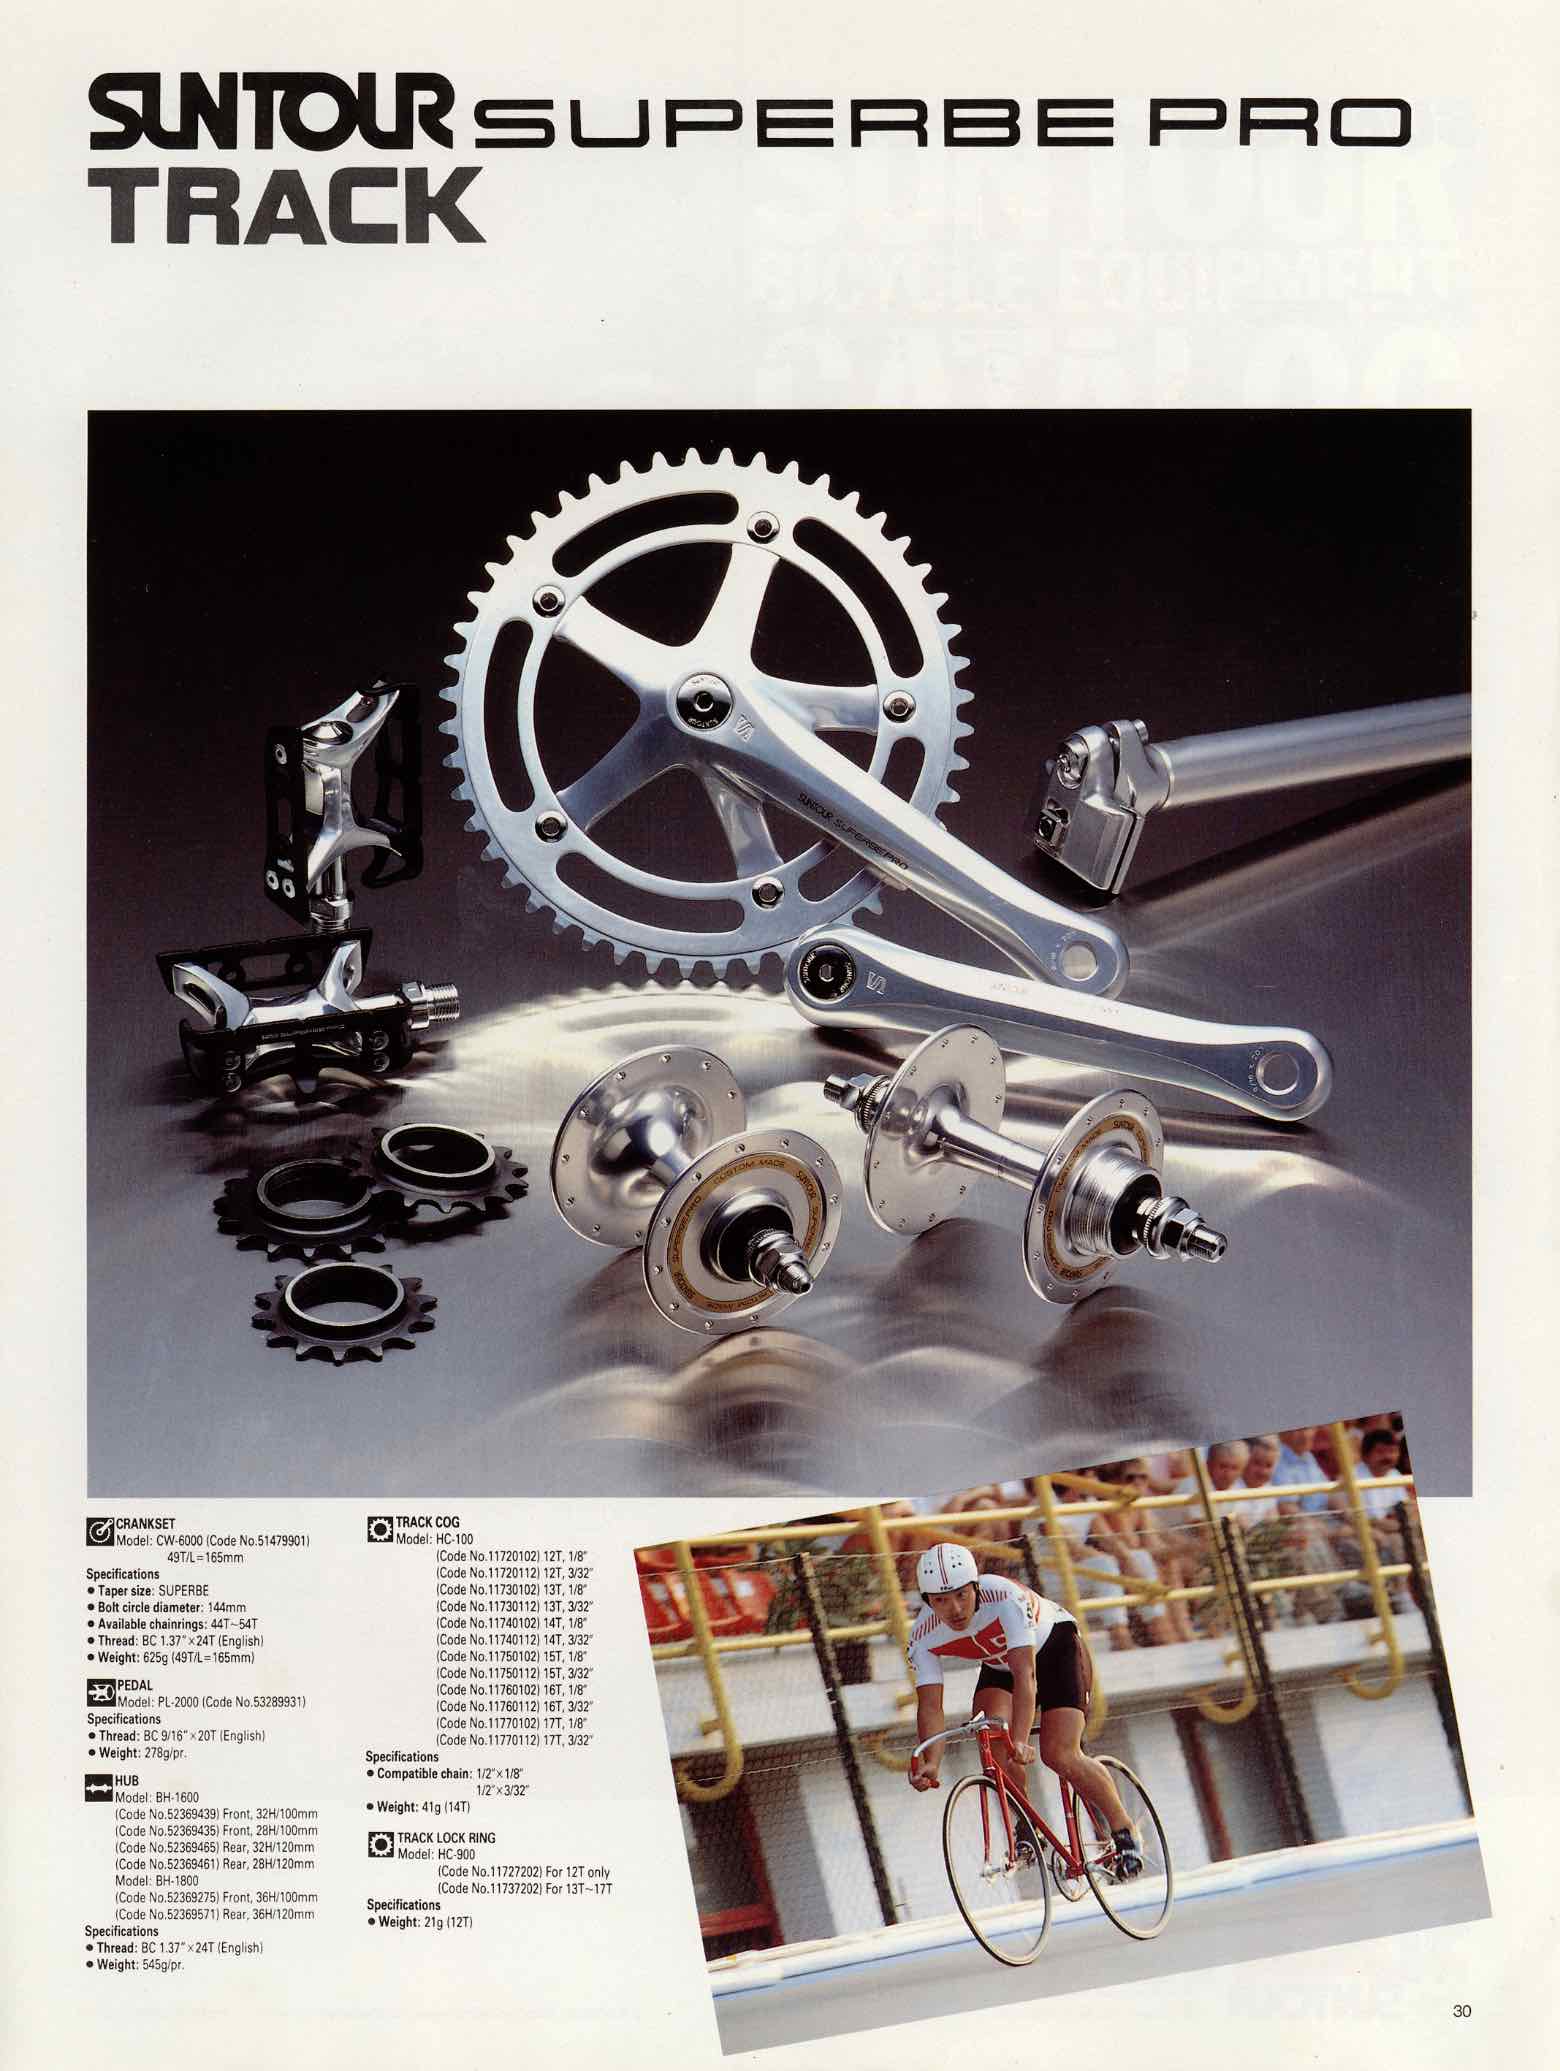 SunTour Bicycle Equipment Catalog 1990 - Page 30 main image